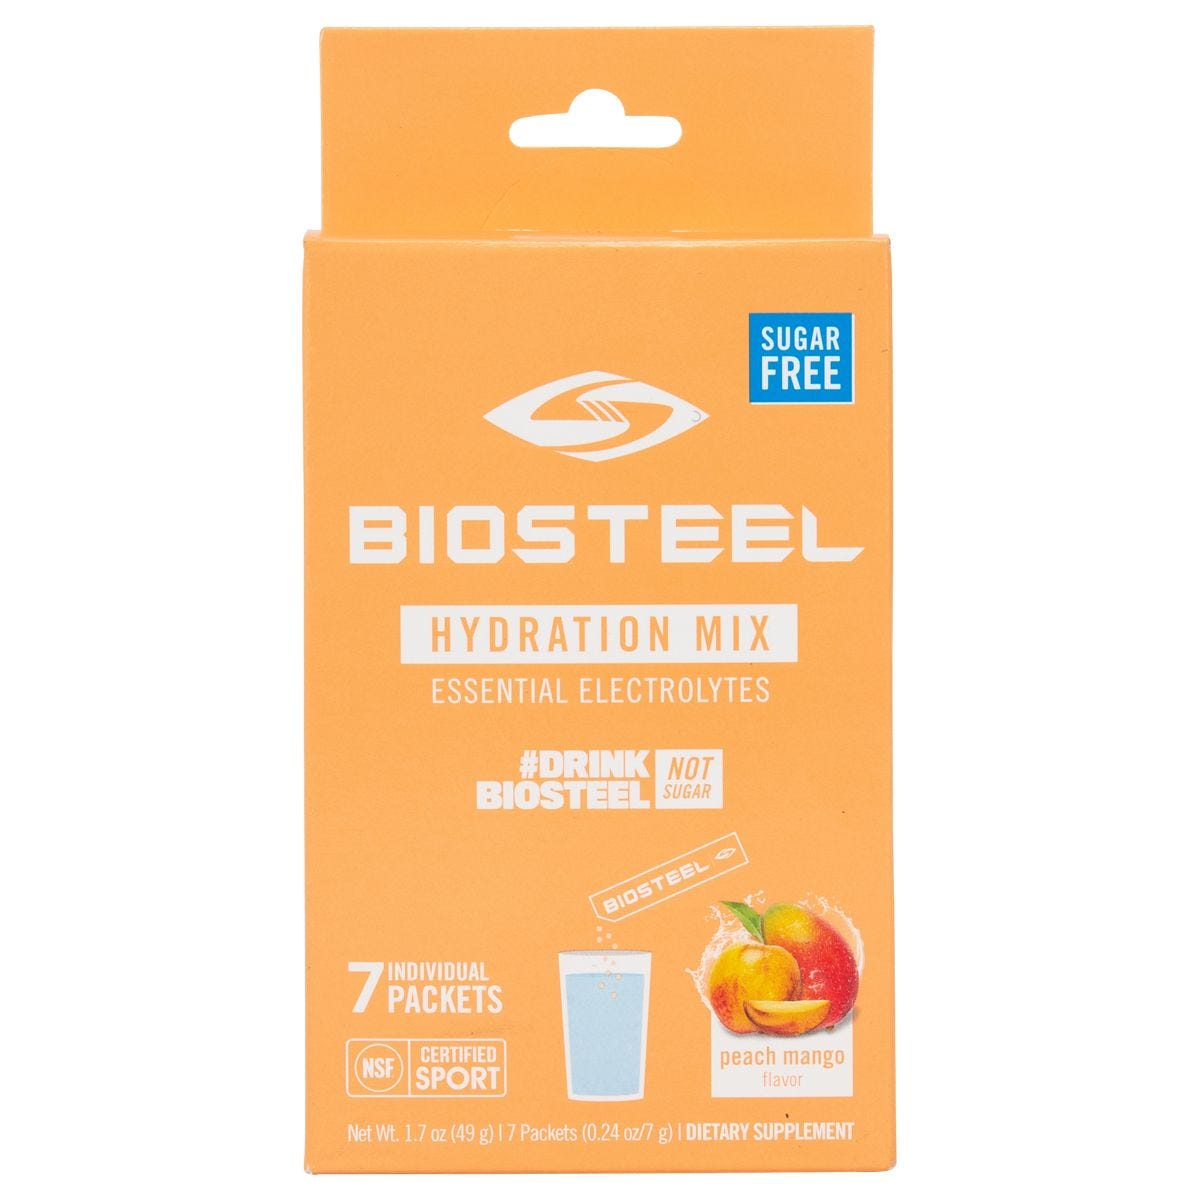 SteelFit, Steel Sweat, Metabolic Catalyst + Energy, Strawberry Mango